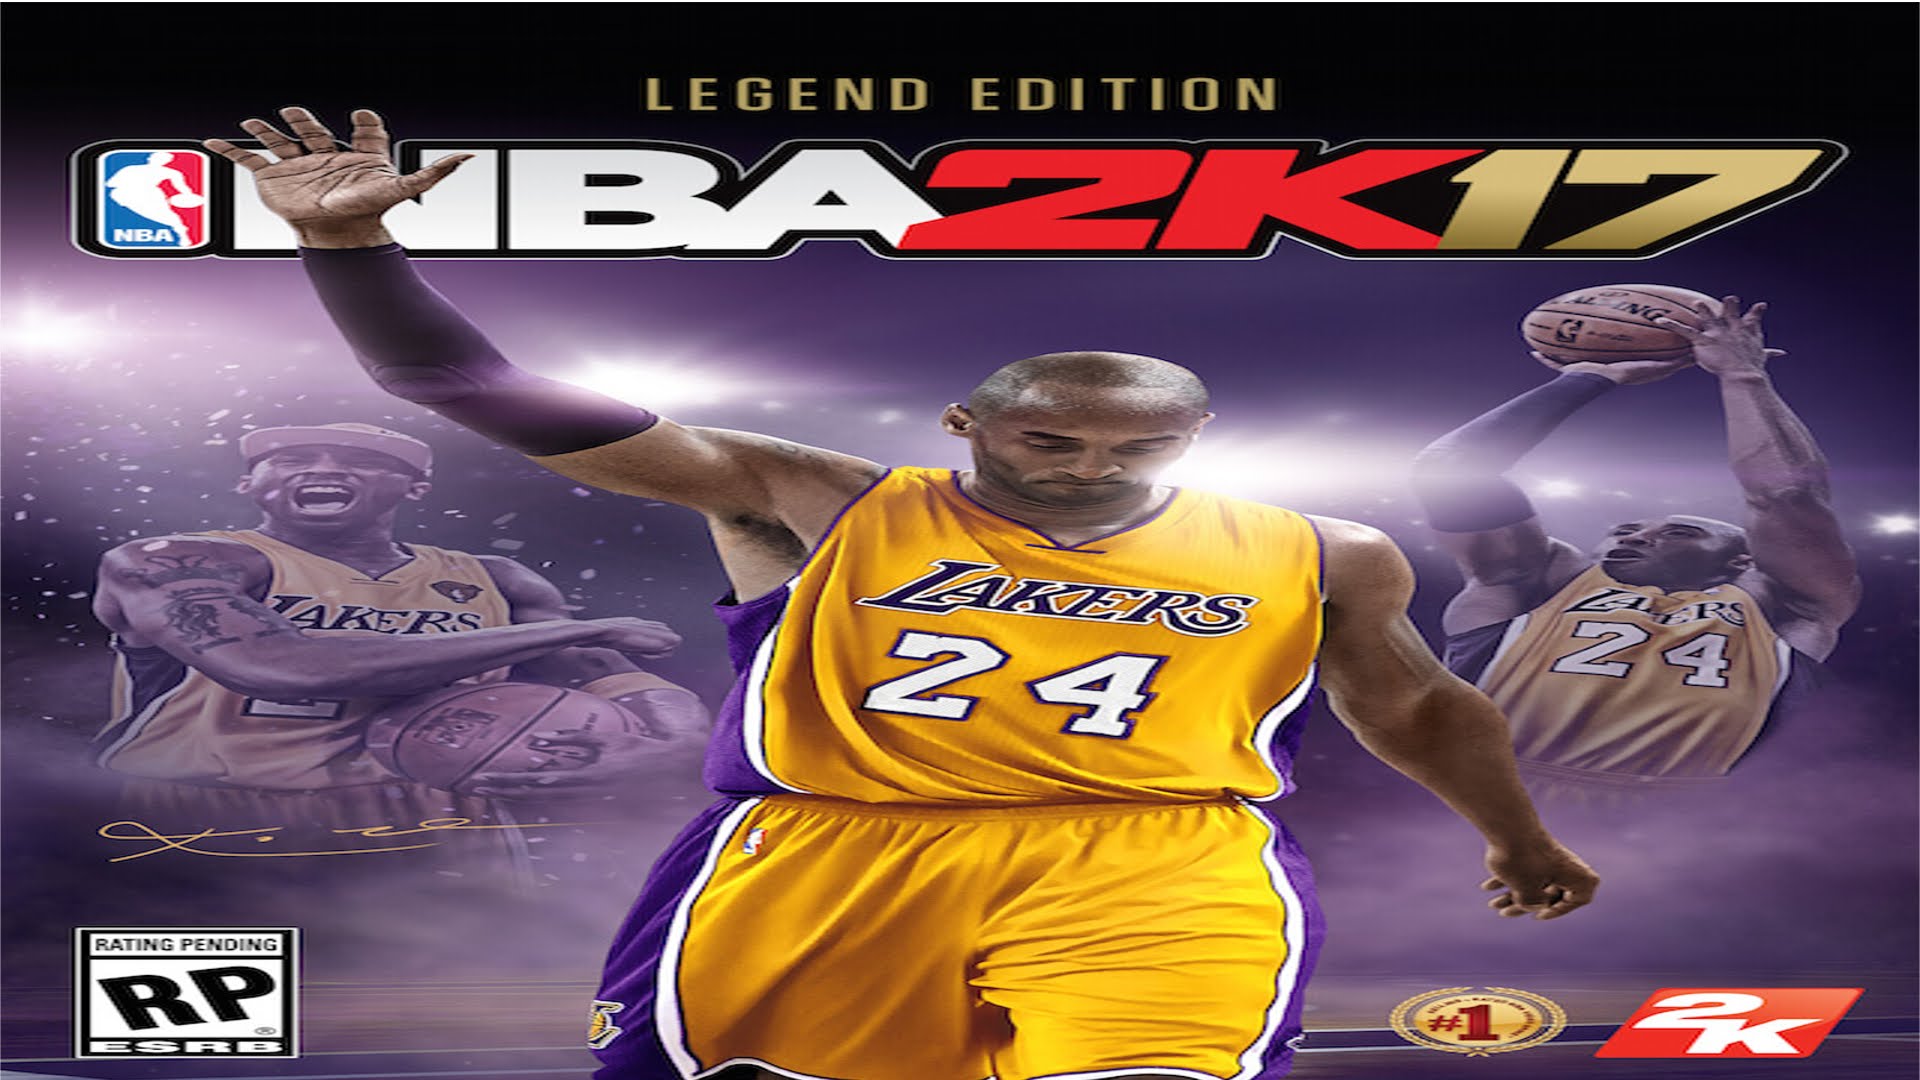 Nba 2k17 Legend Edition Feat Kobe Bryant Revealed New